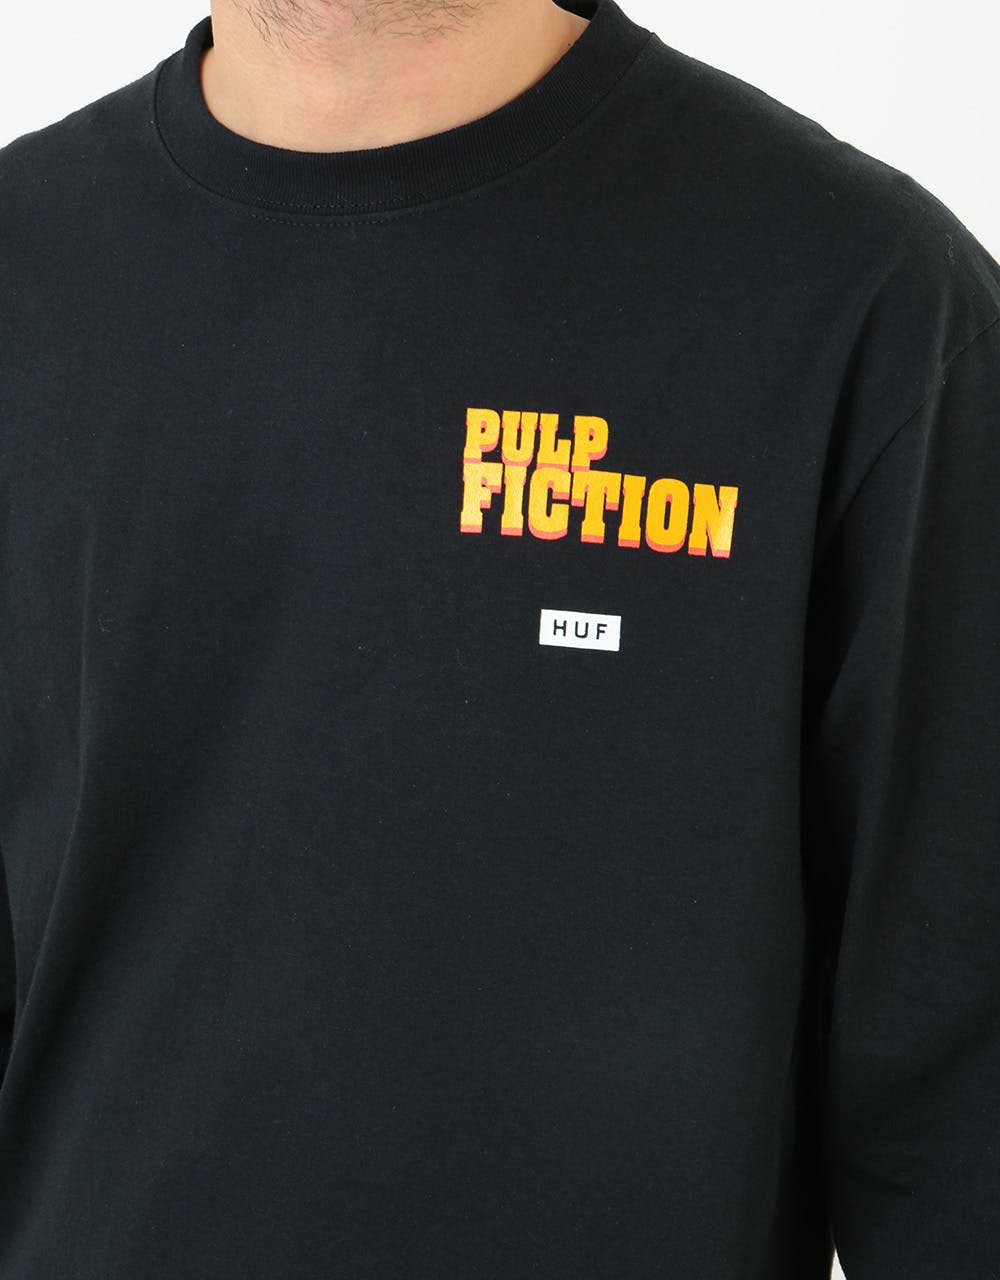 HUF x Pulp Fiction Bad Mother Fucker L/S T-Shirt - Black